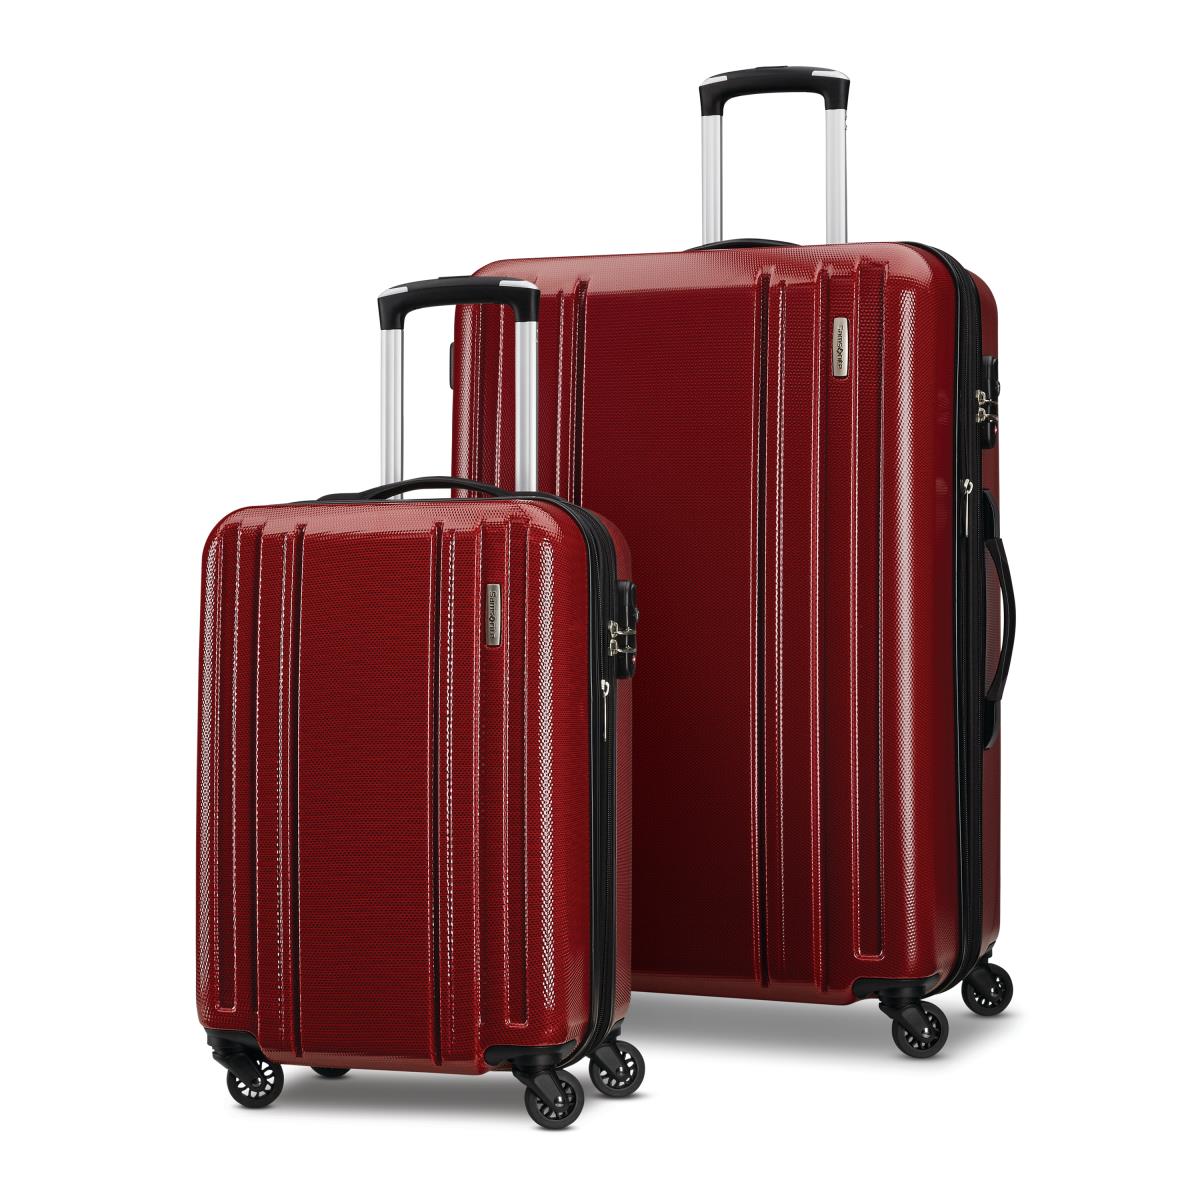 Samsonite Carbon 2 2 Piece Co/lg Set - Luggage RED